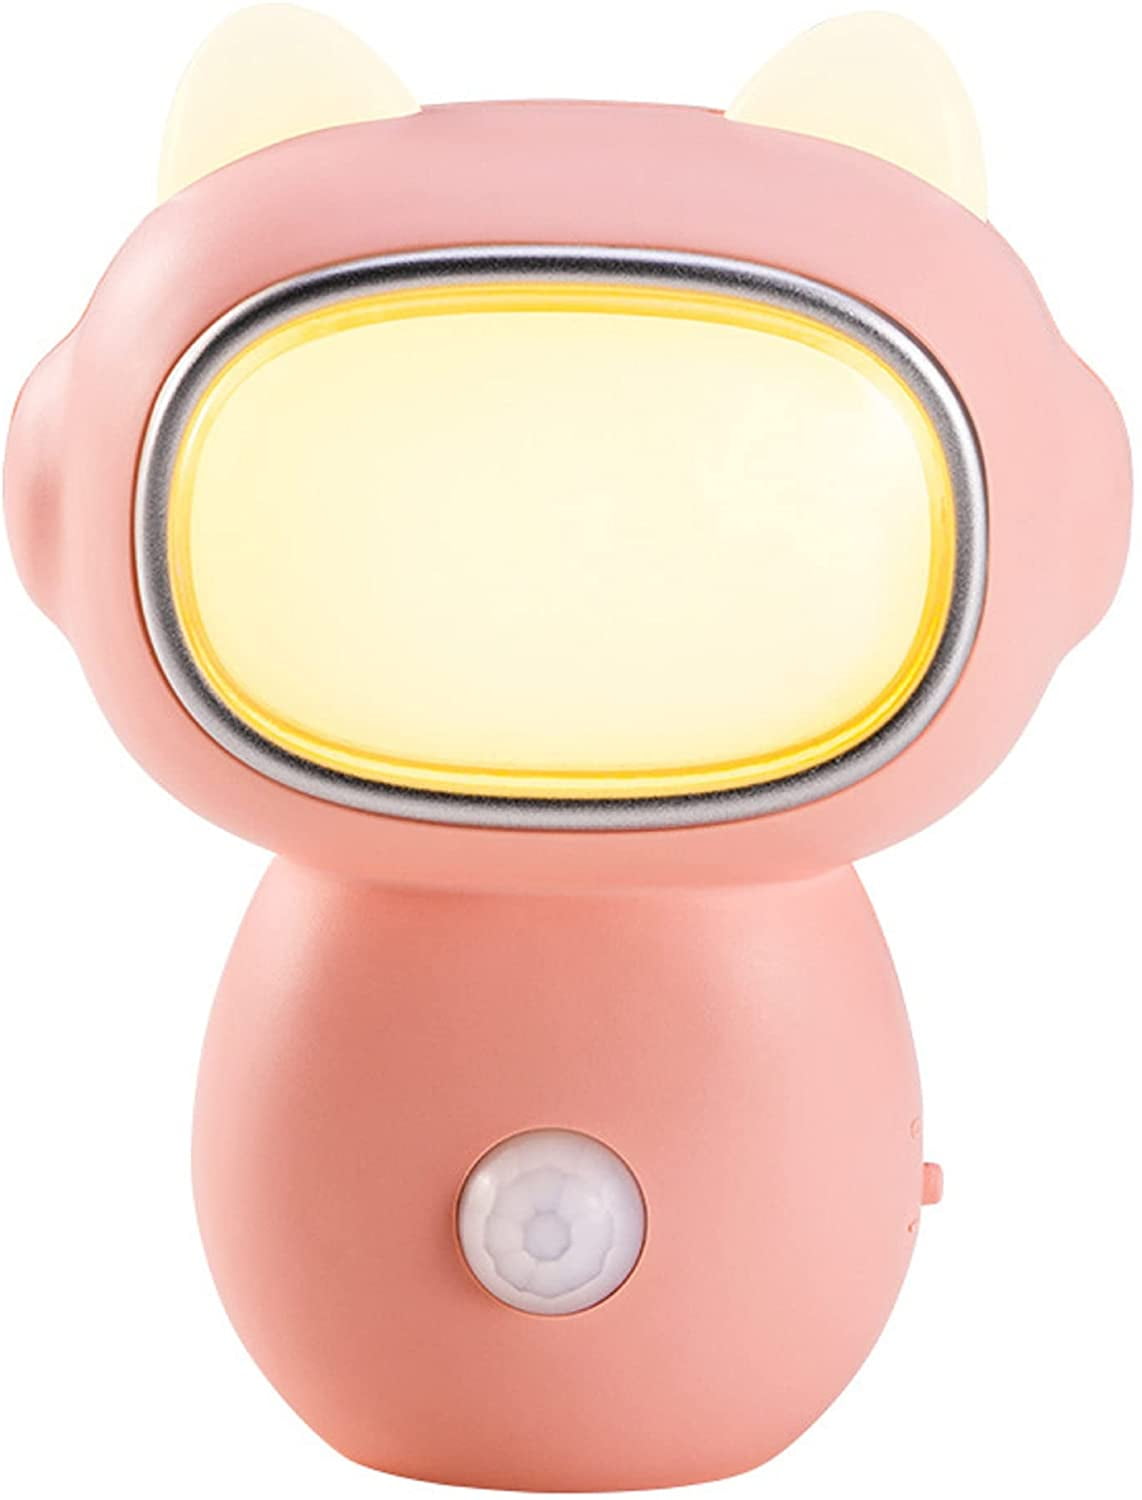 This motion sensor toilet light stole my tech geek heart - Reviewed